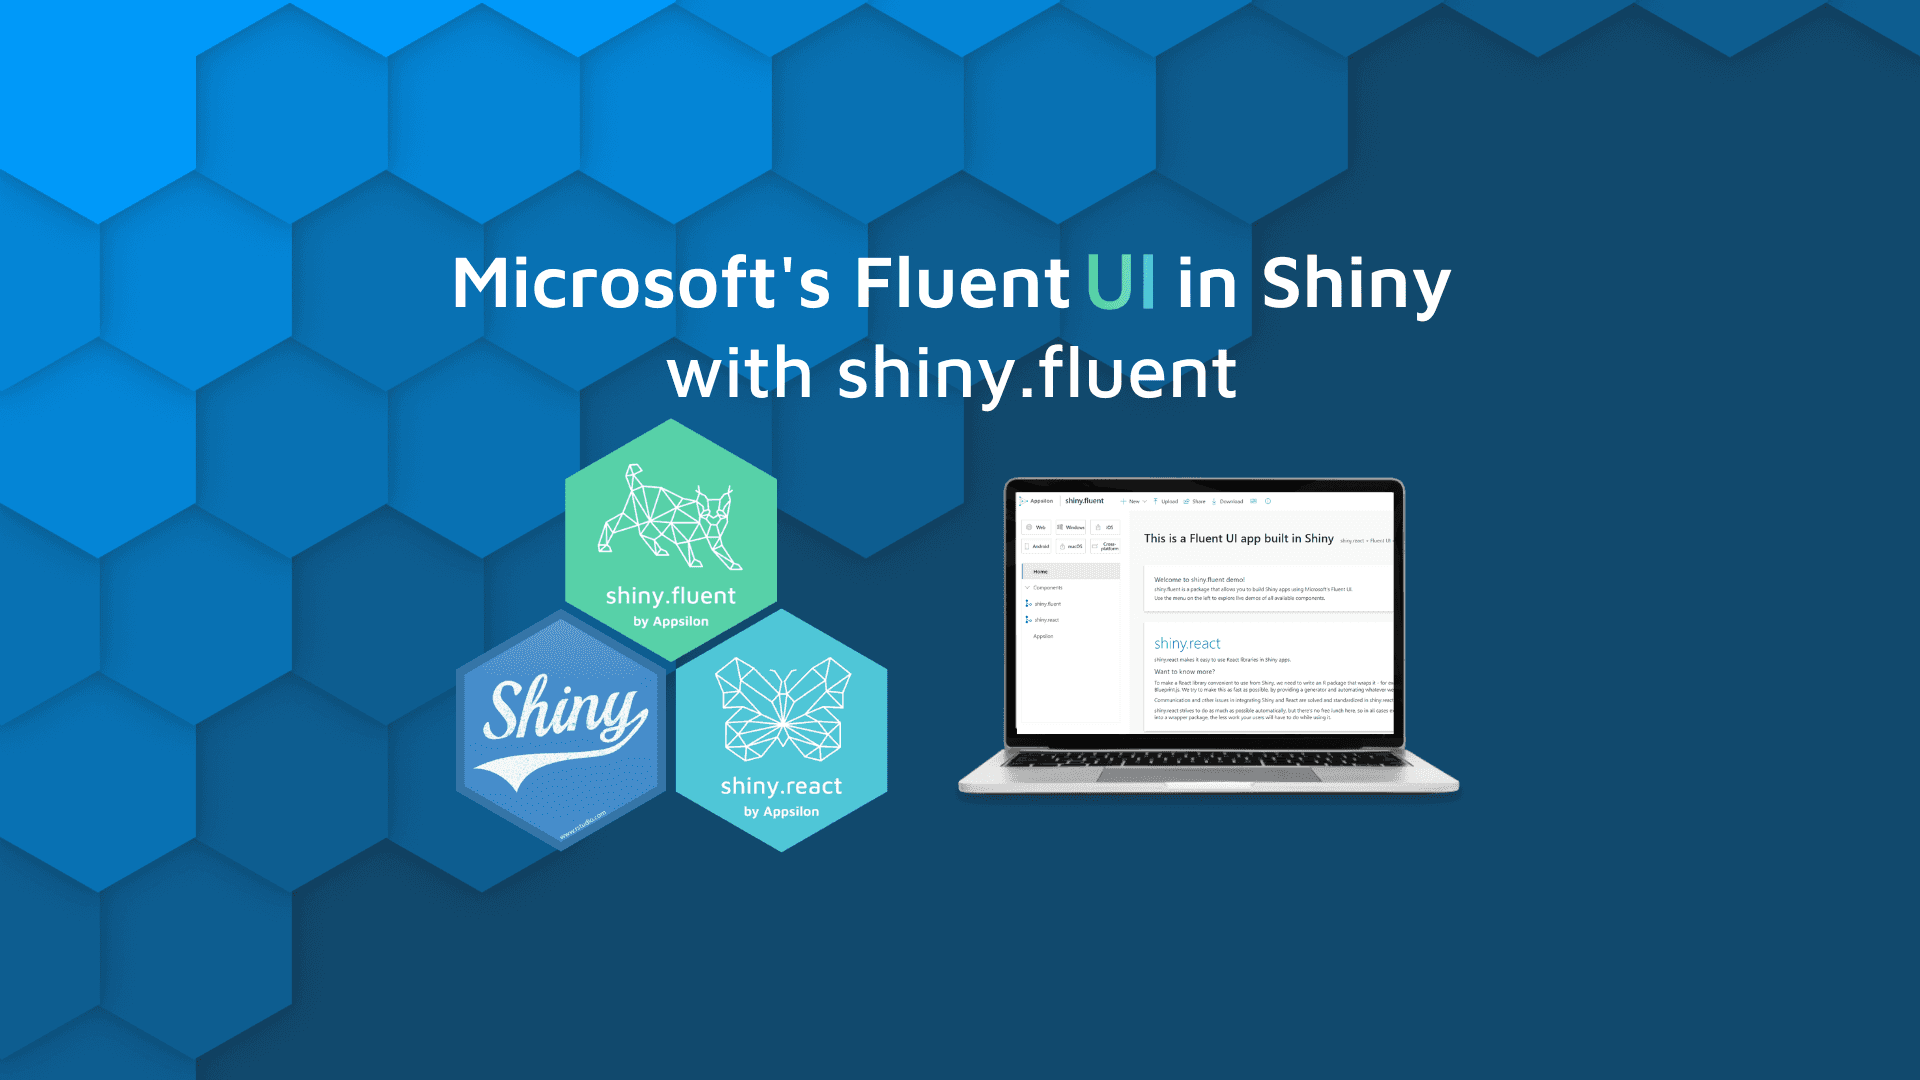 Microsoft's Fluent UI ported to Shiny with shiny.fluent and shiny.react